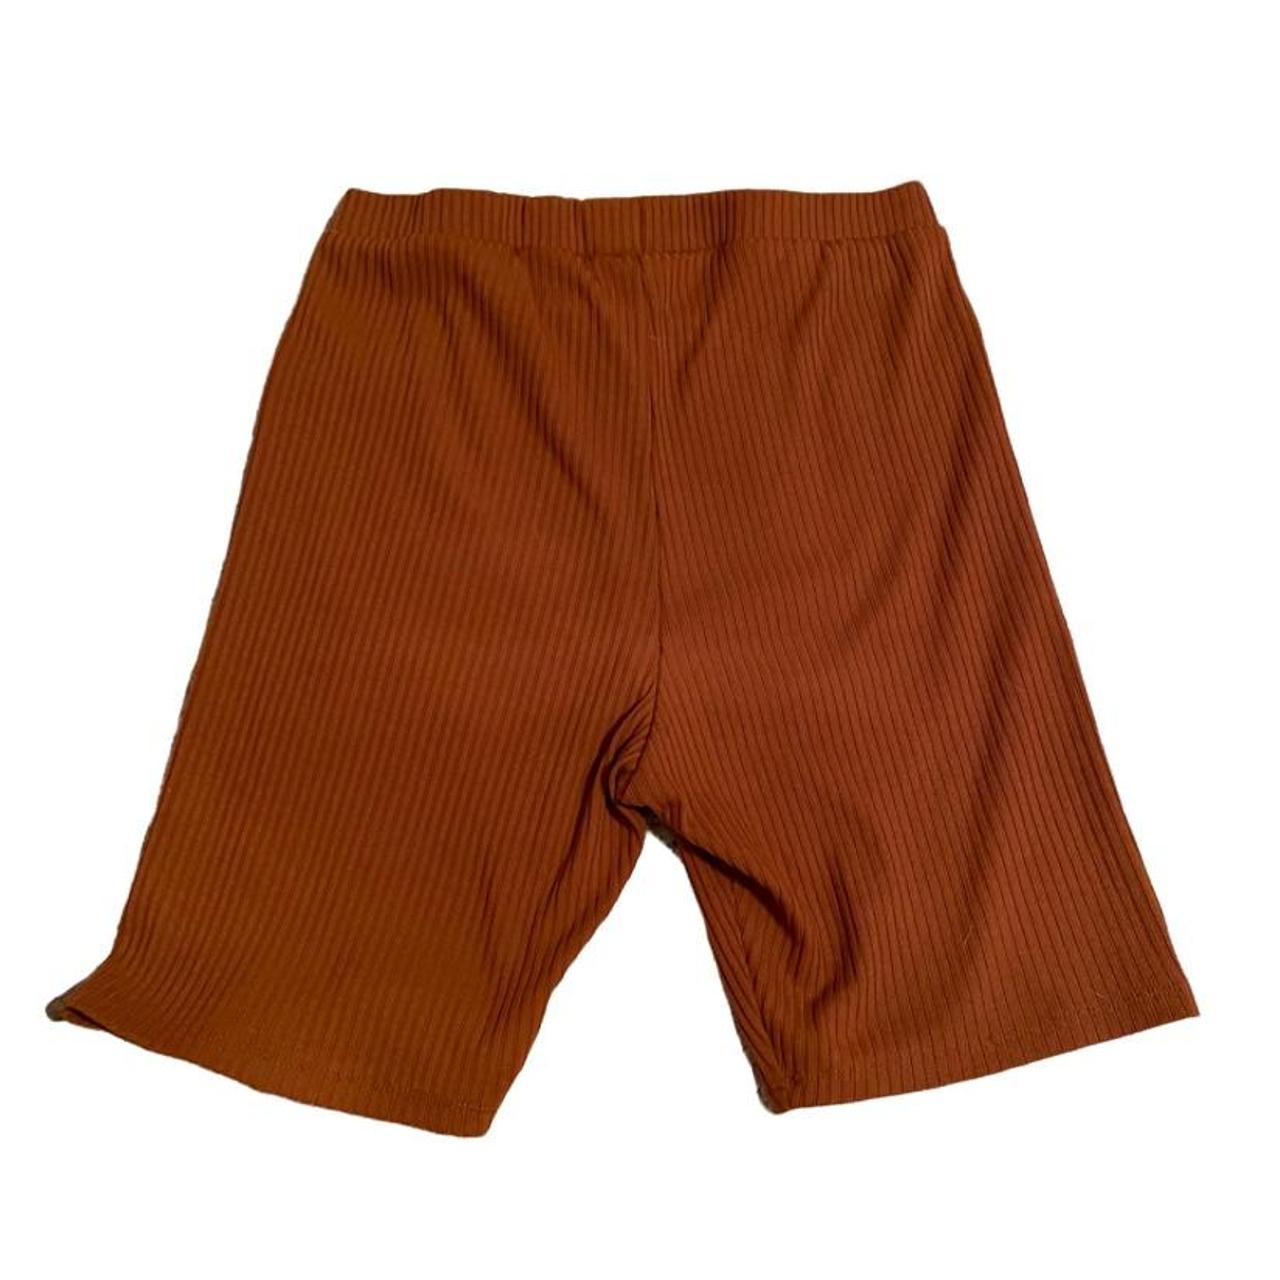 Iris Los Angeles Women's Orange Shorts (2)